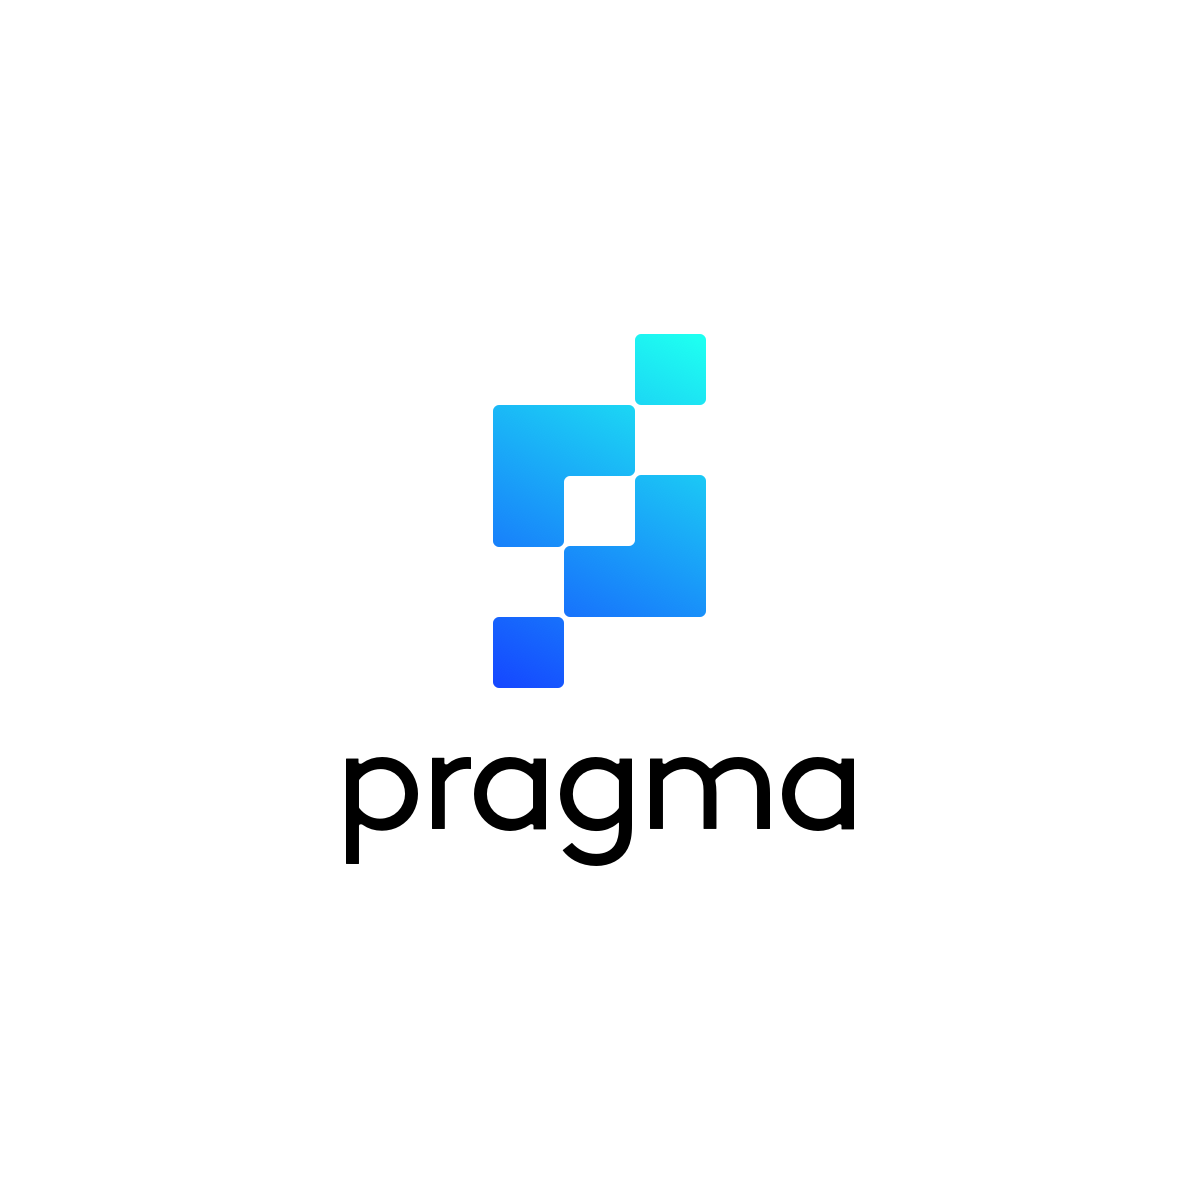 Pragma. Pragma Universe. Pragma Ingoda. Pragma once